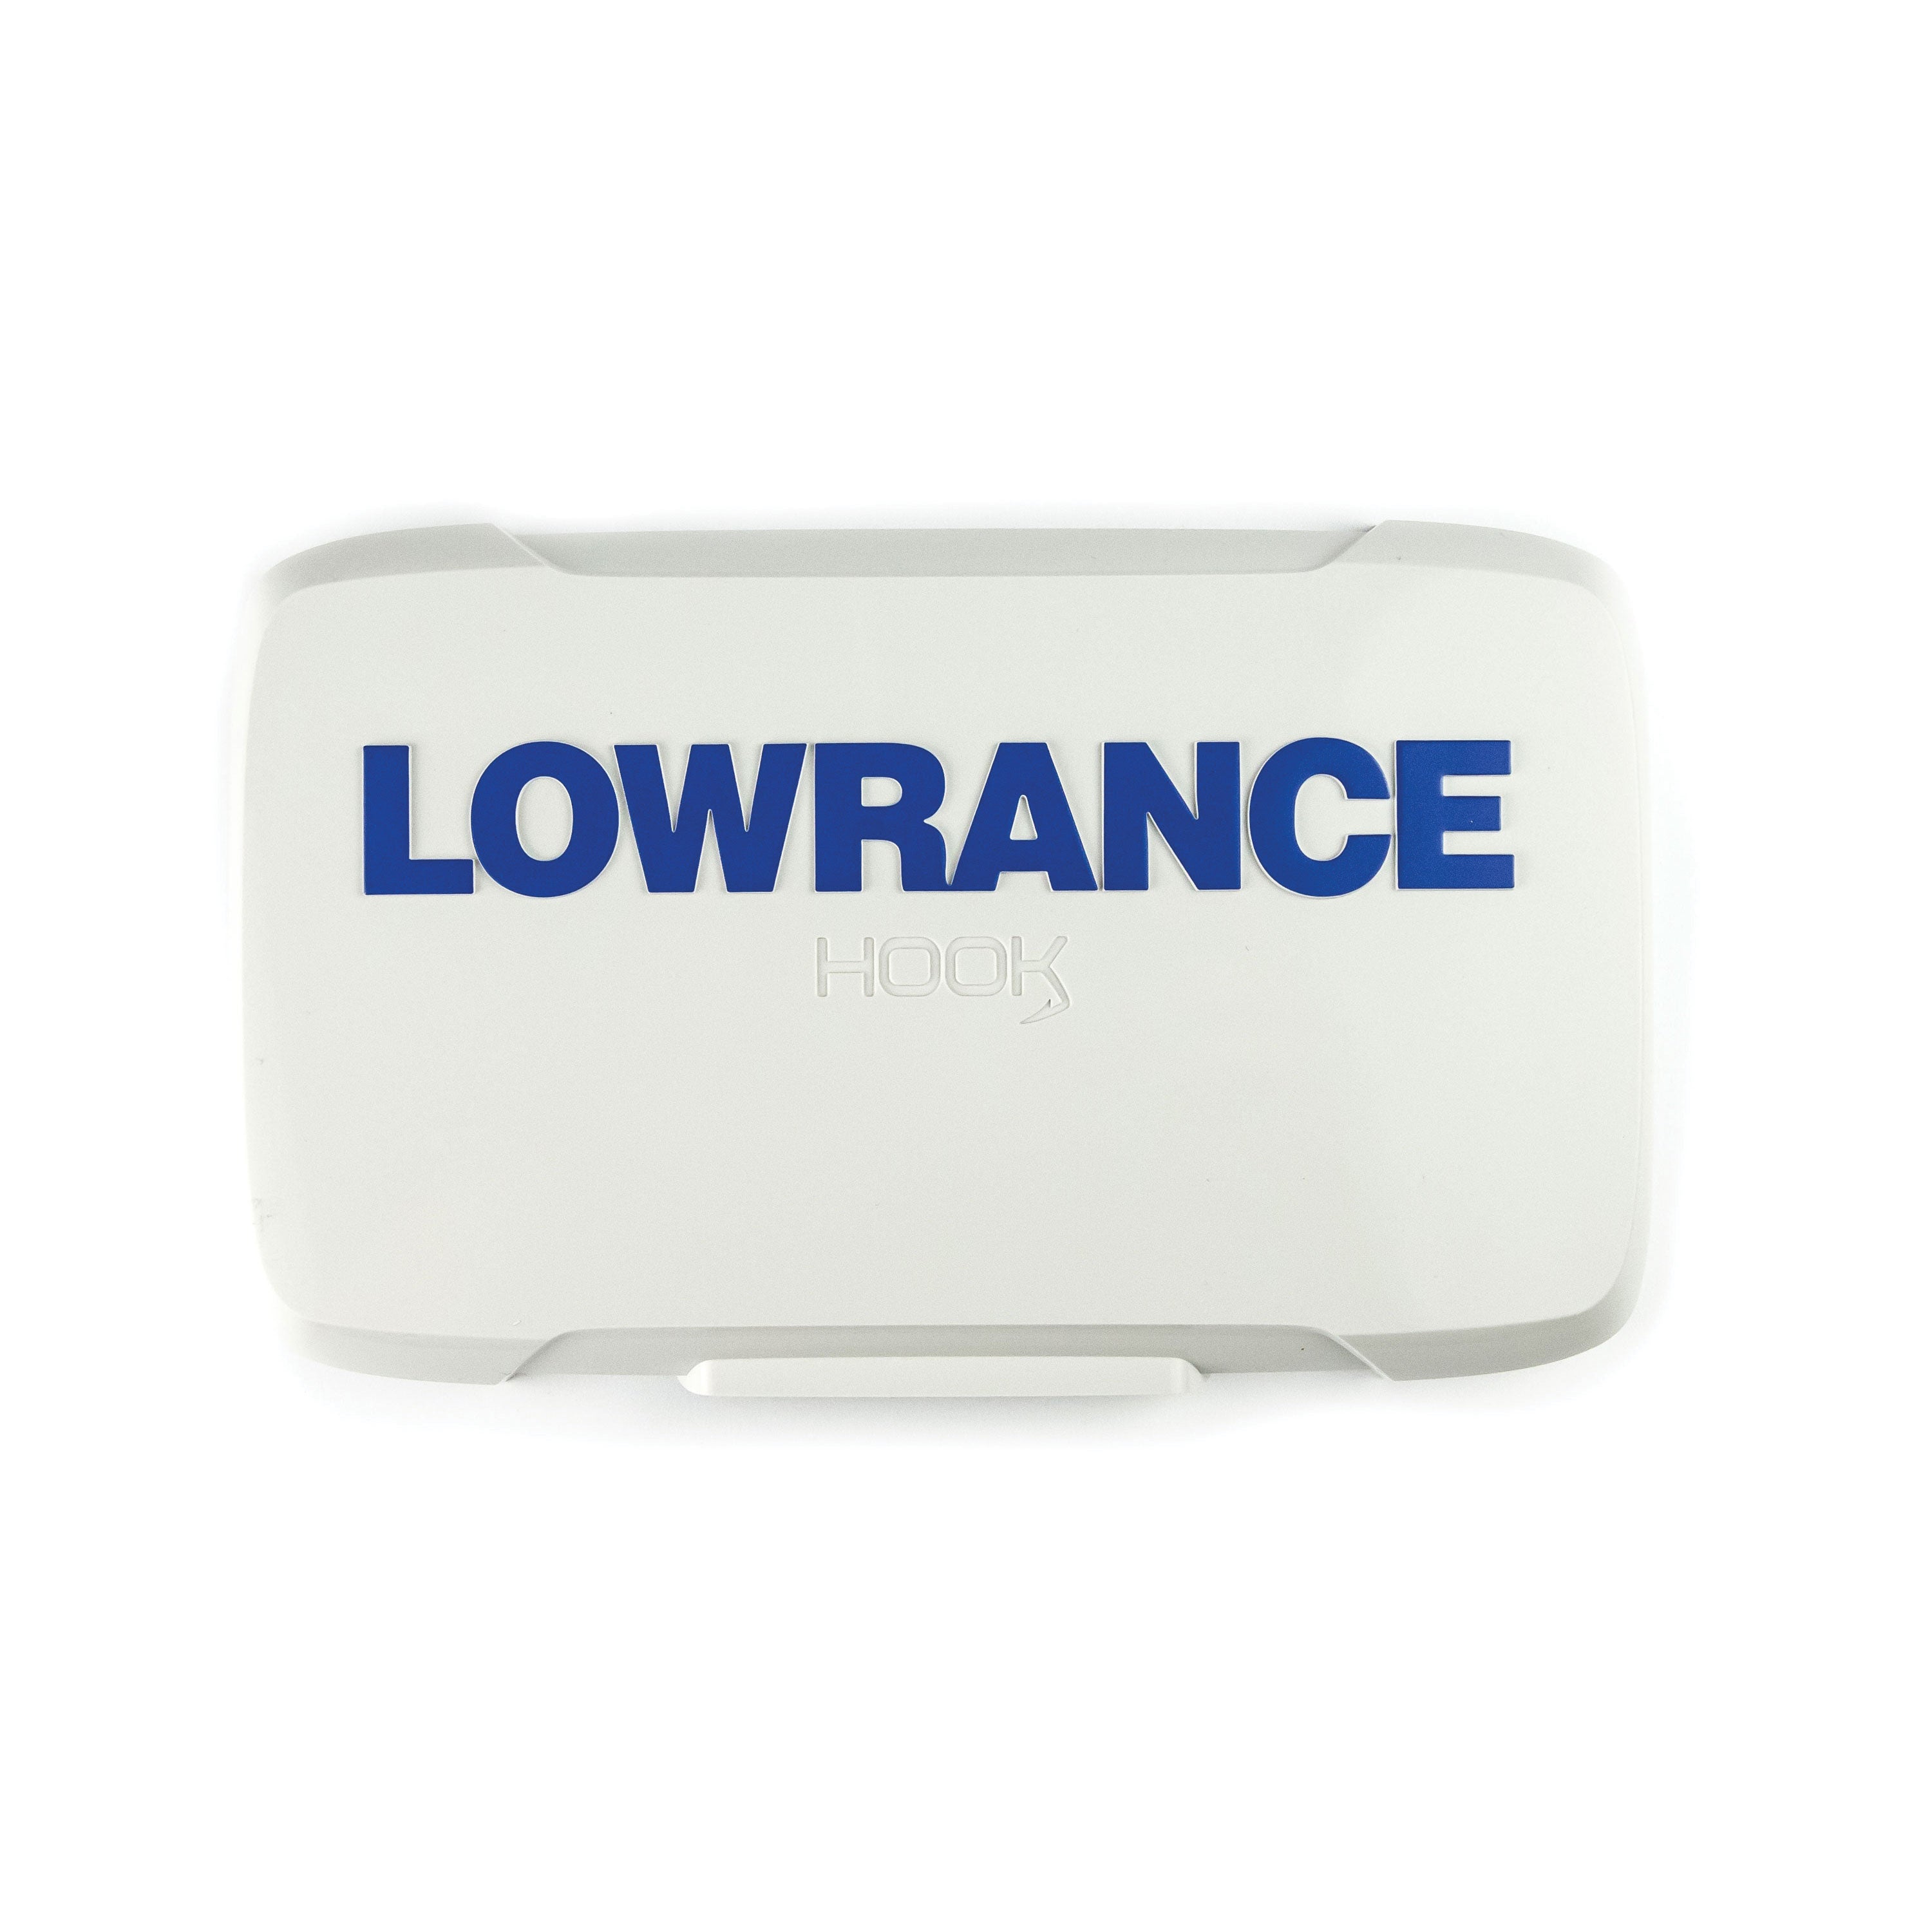 Lowrance 000-14174-001 HOOK2 Sun Cover - 5"